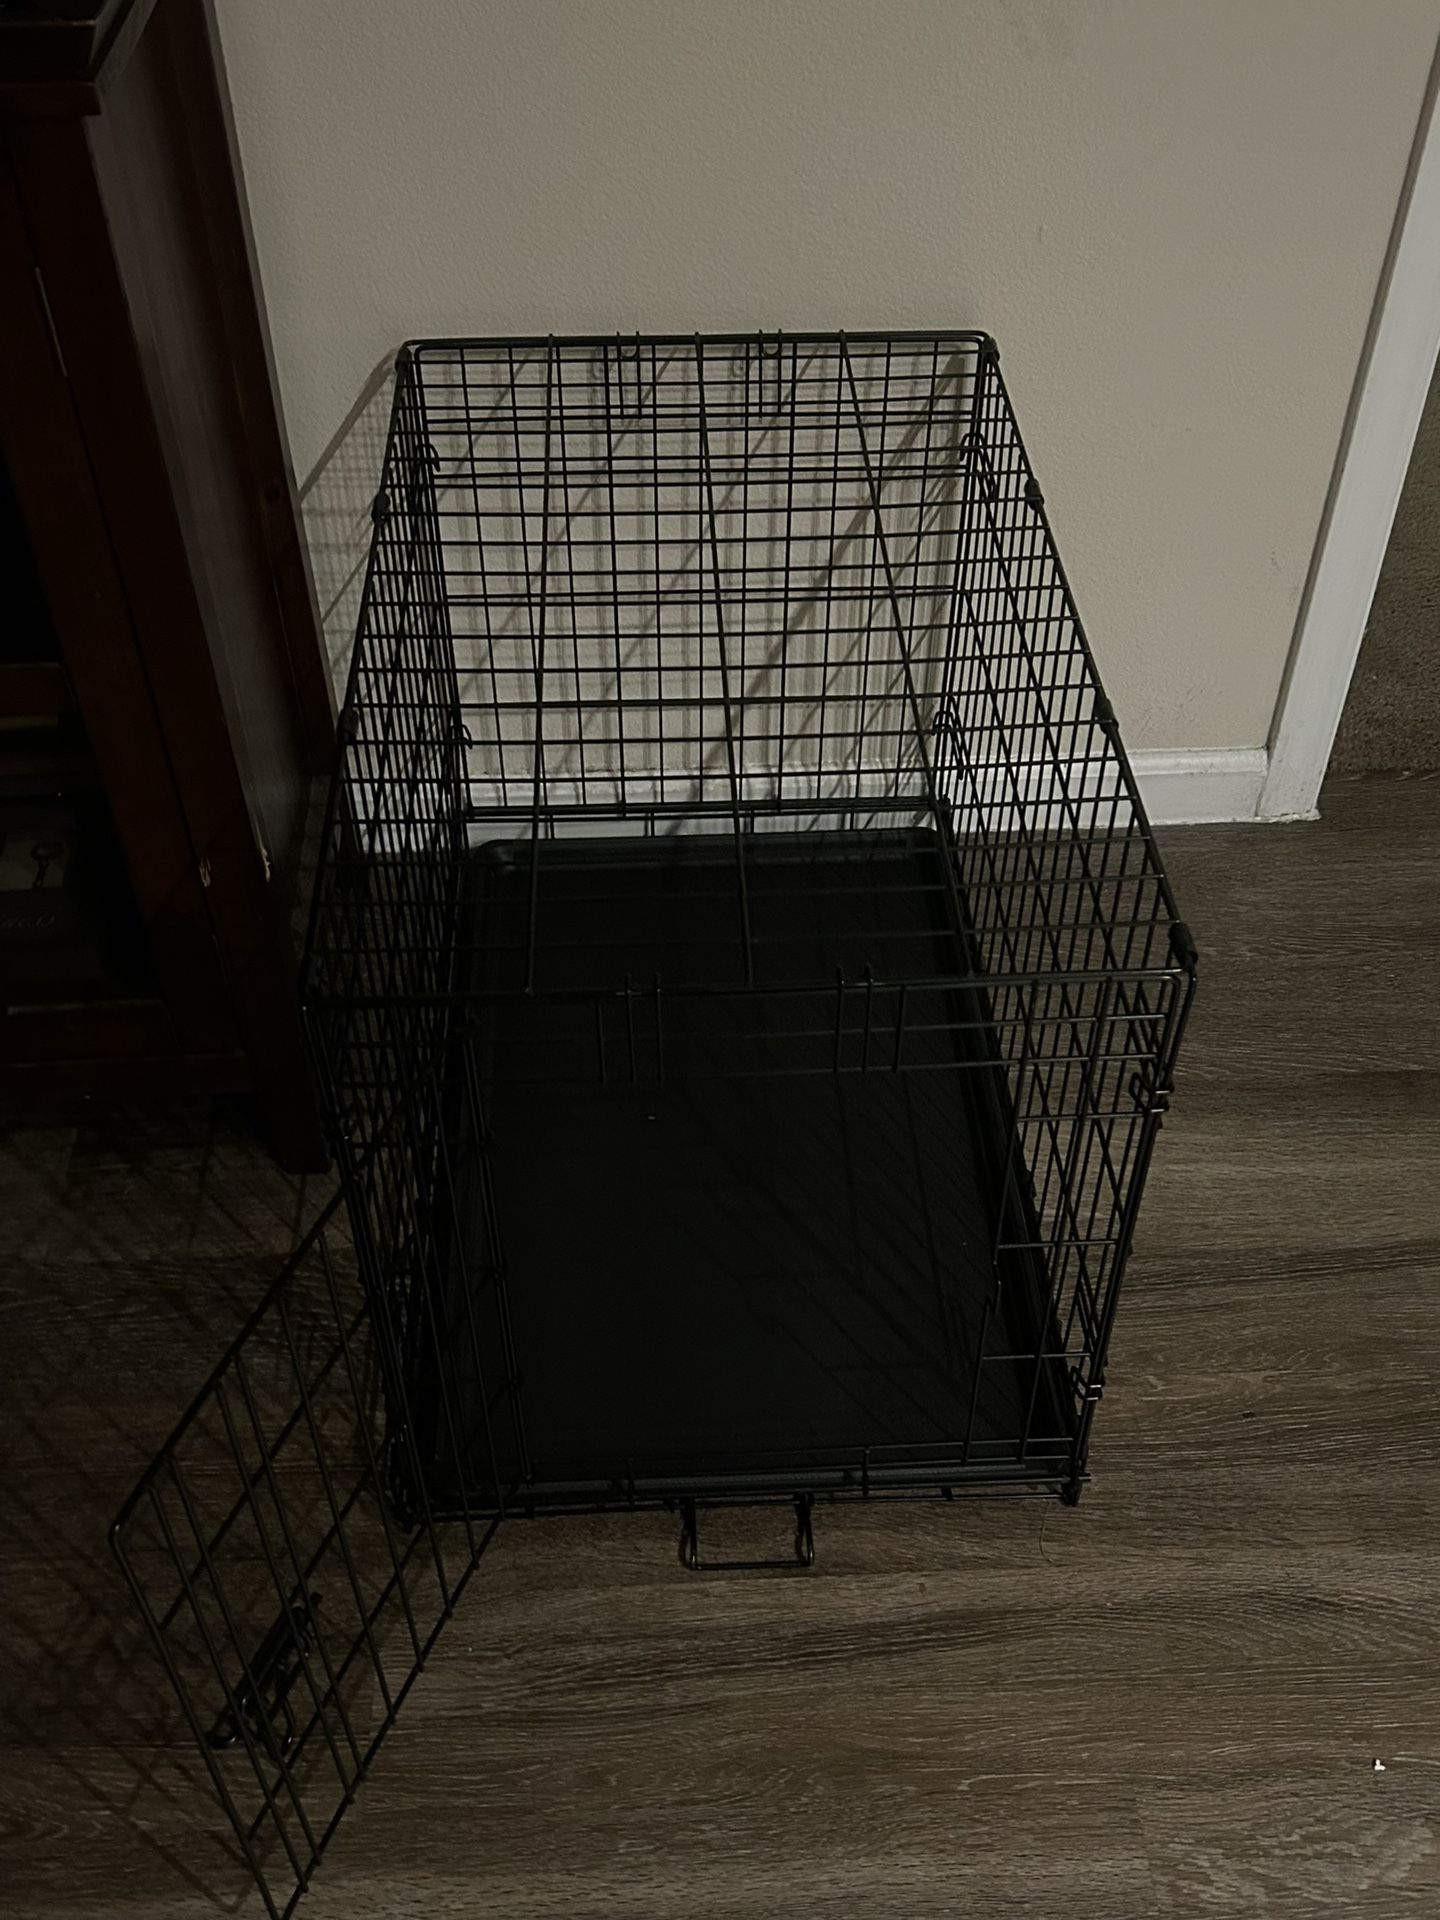 Dog Crate/kennel Medium 